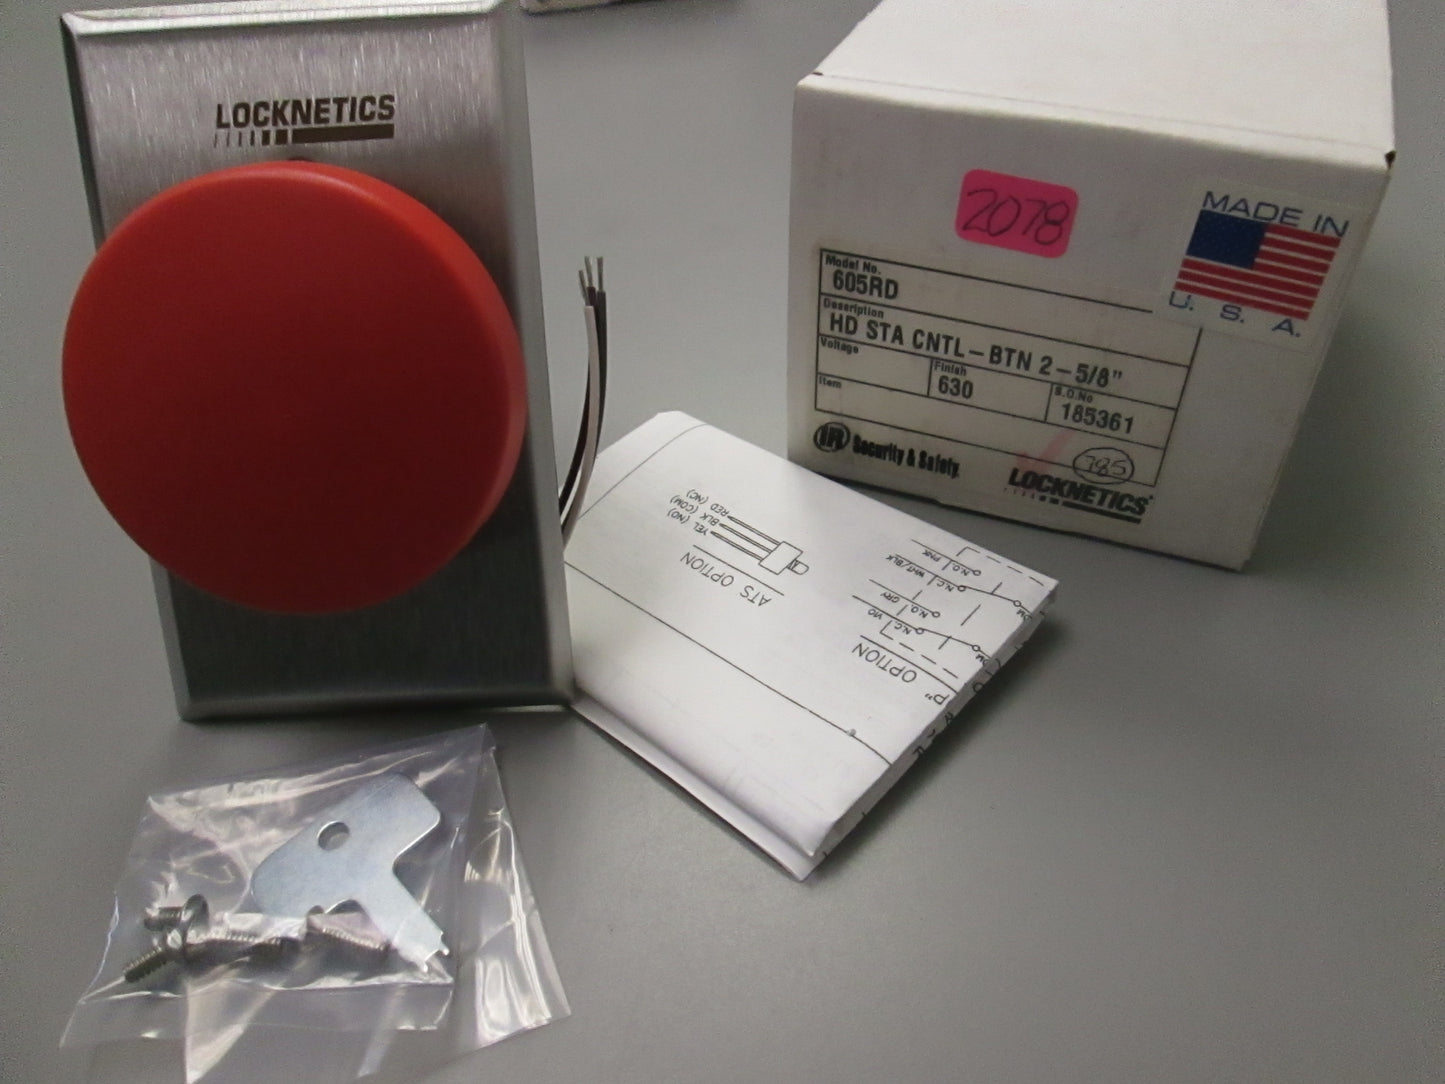 Locknetics 605 RD Heavy Duty Push Button to Egress Electronically Locked Door Wide Plate